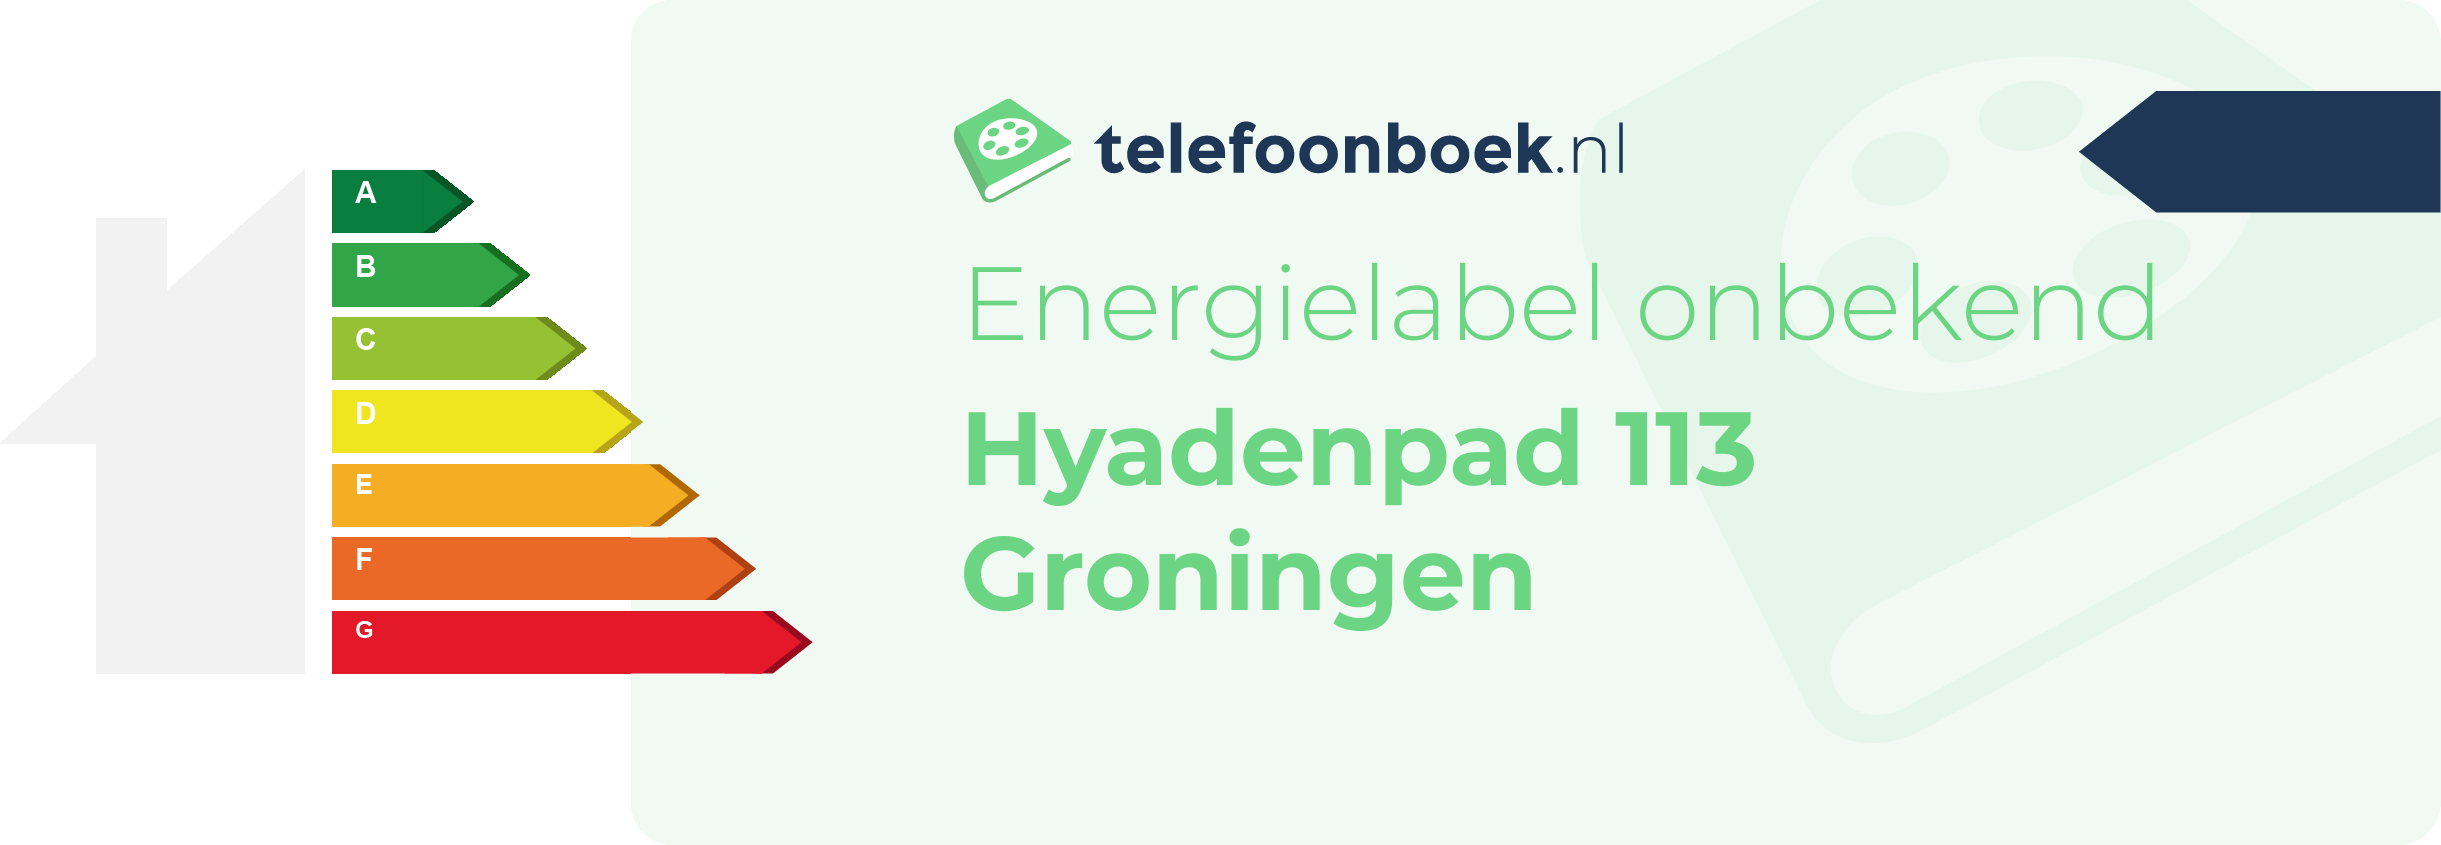 Energielabel Hyadenpad 113 Groningen